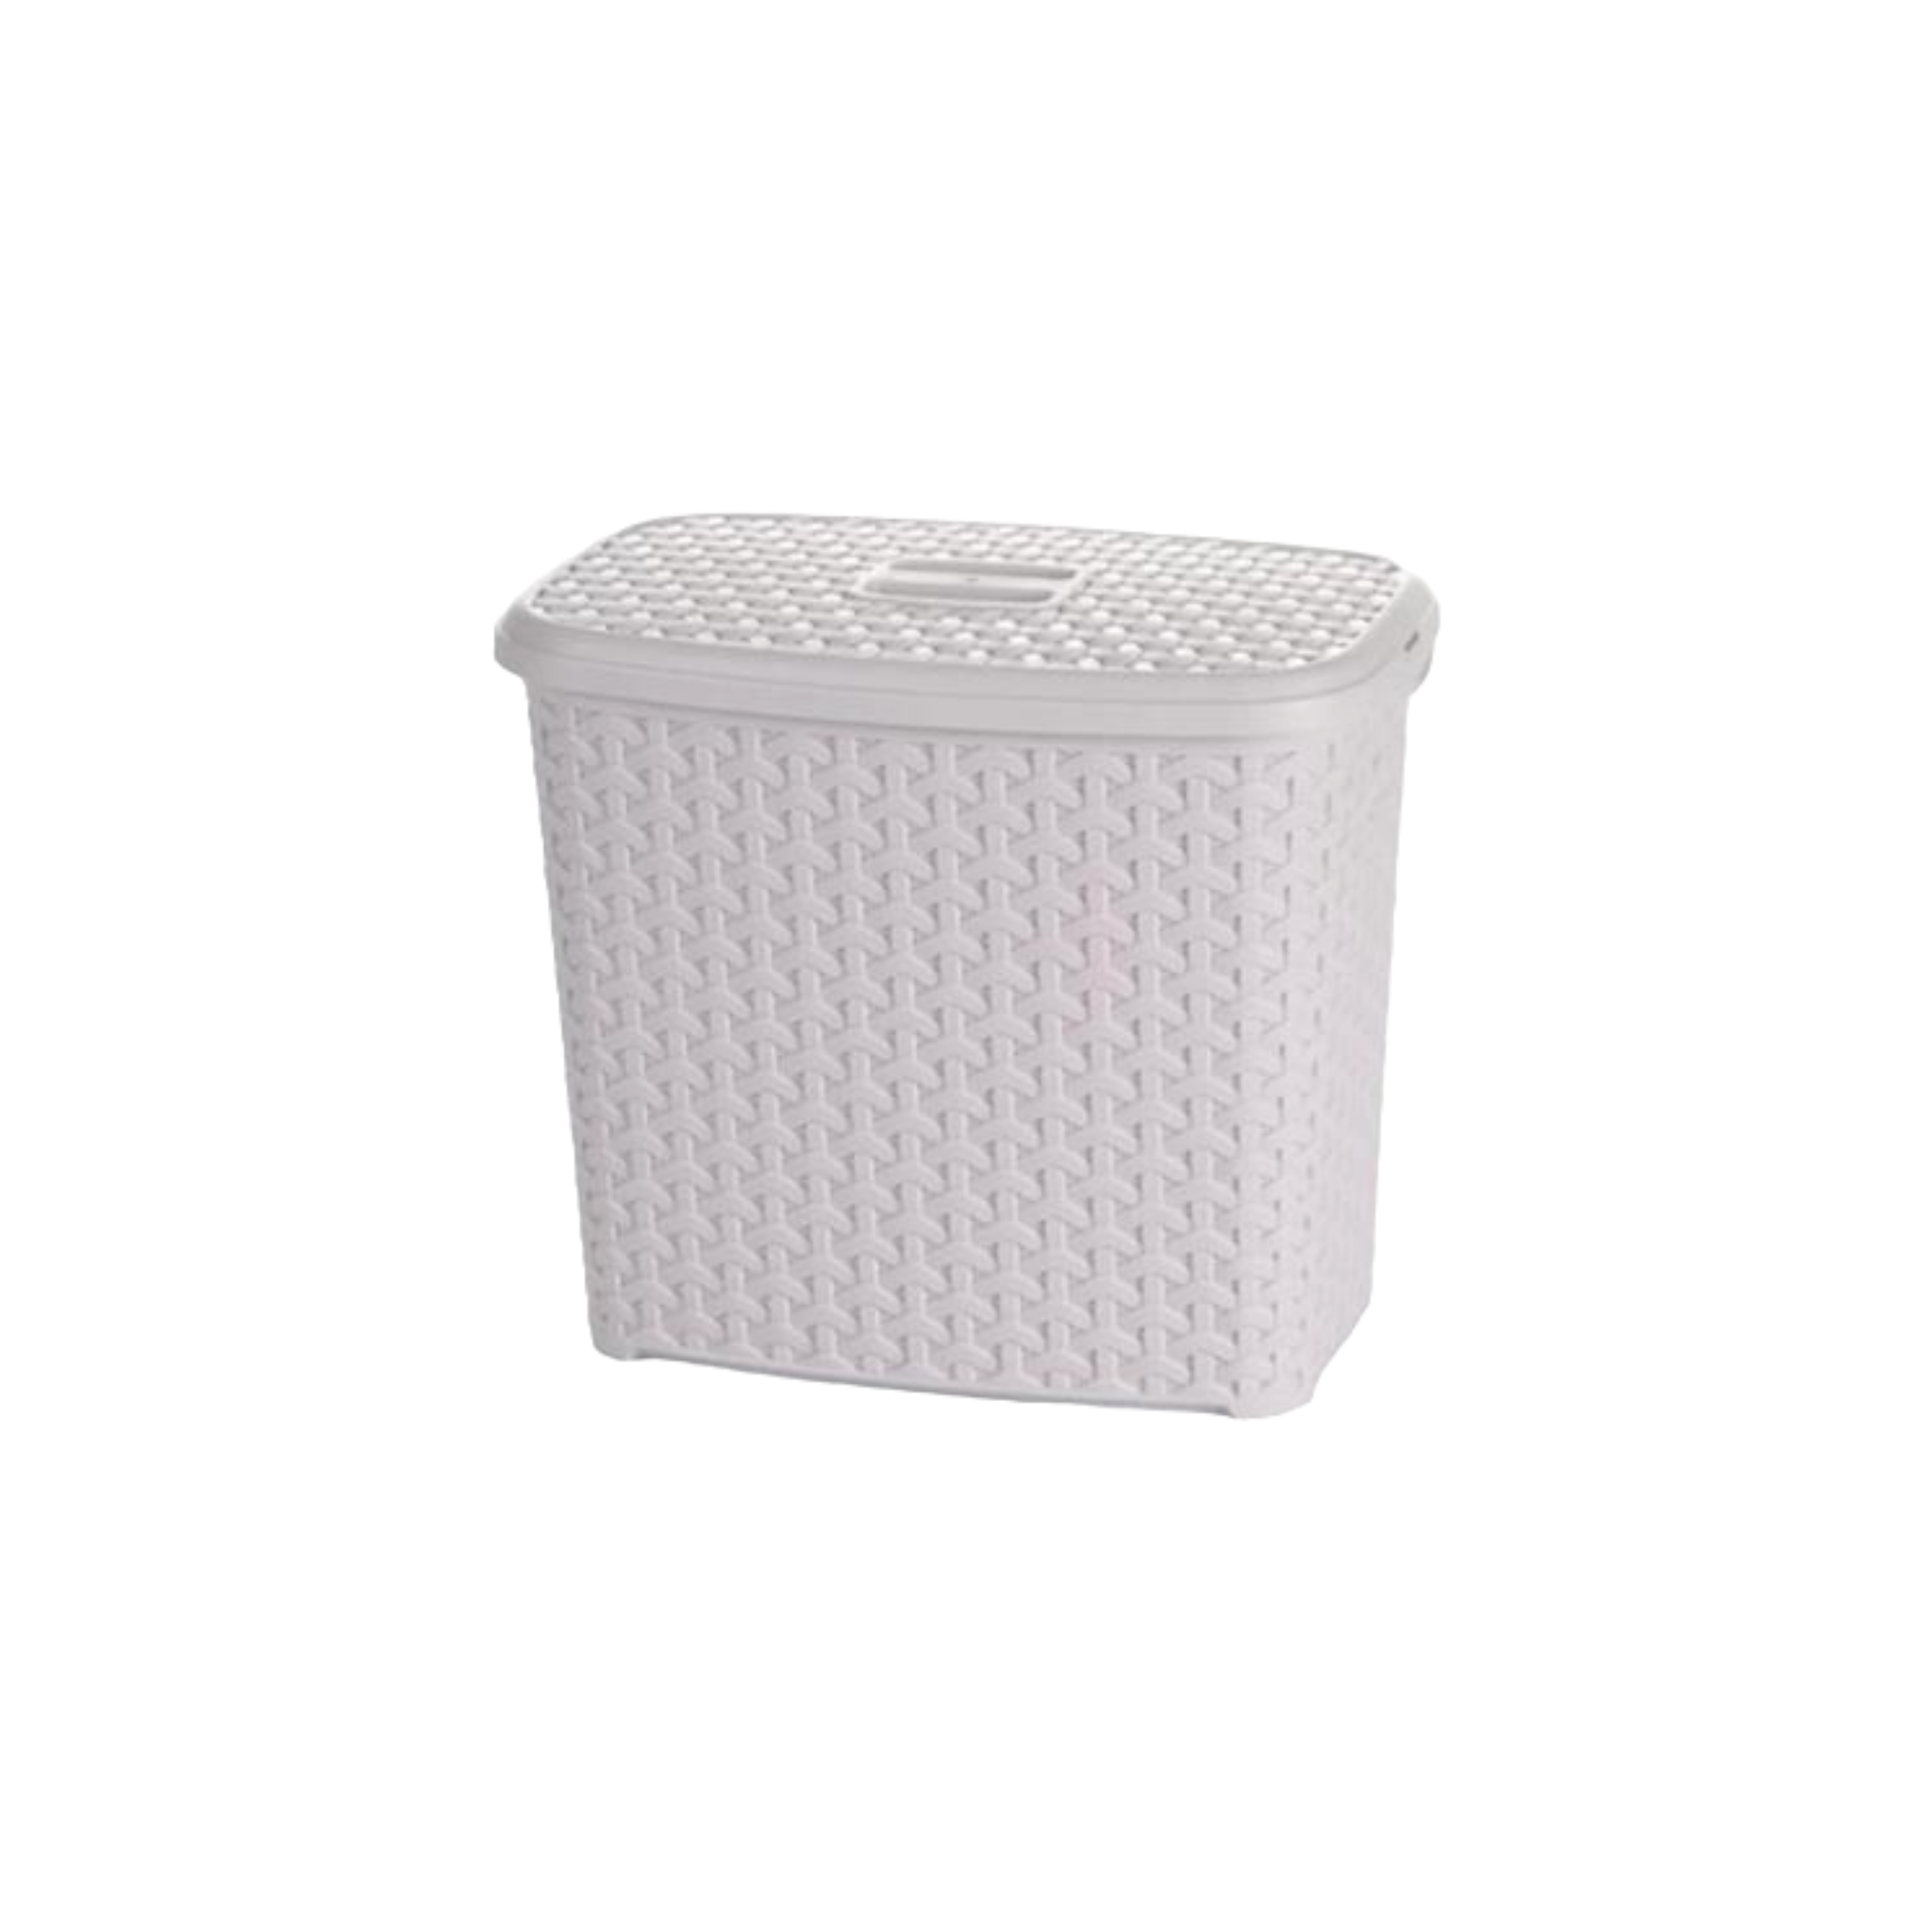 Detergent Box Rattan Design 5.5L